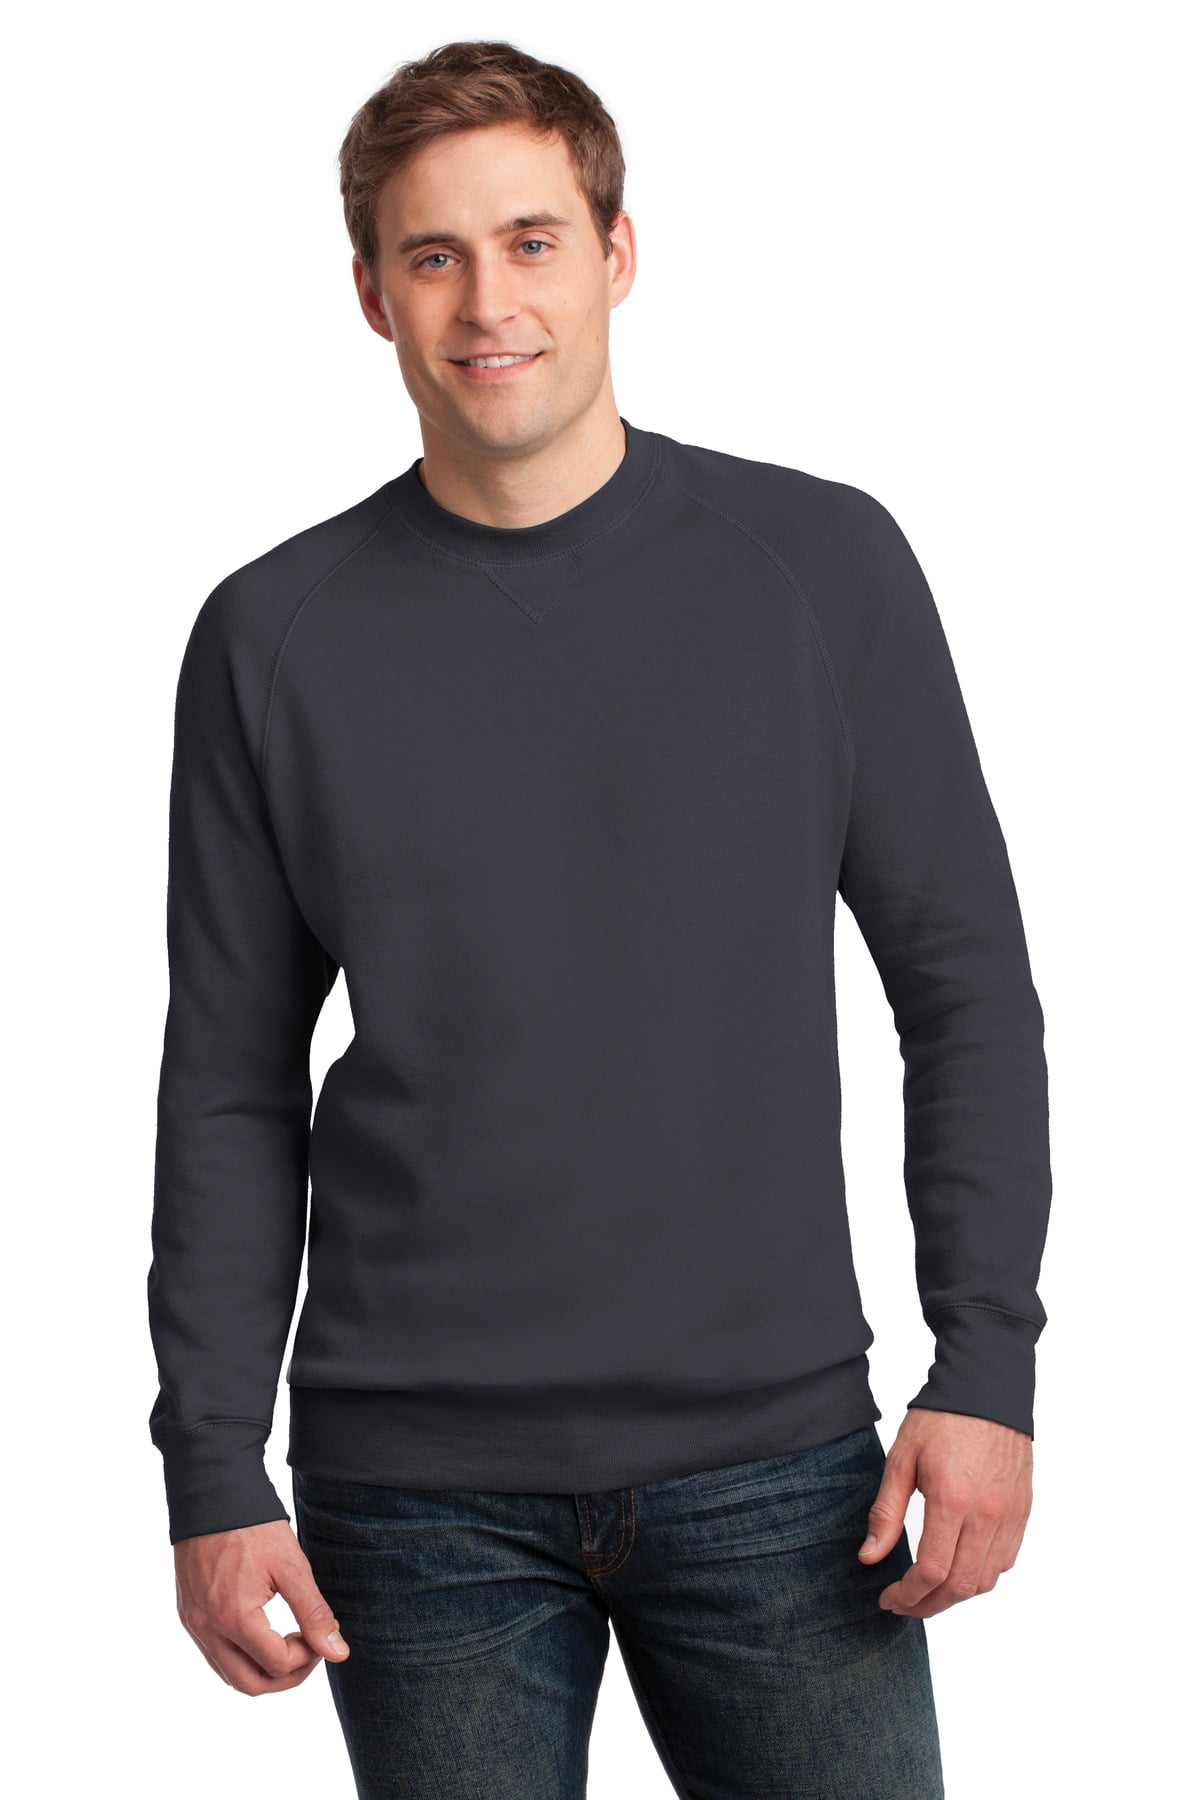 Nano Crewneck Sweatshirt - Walmart.com